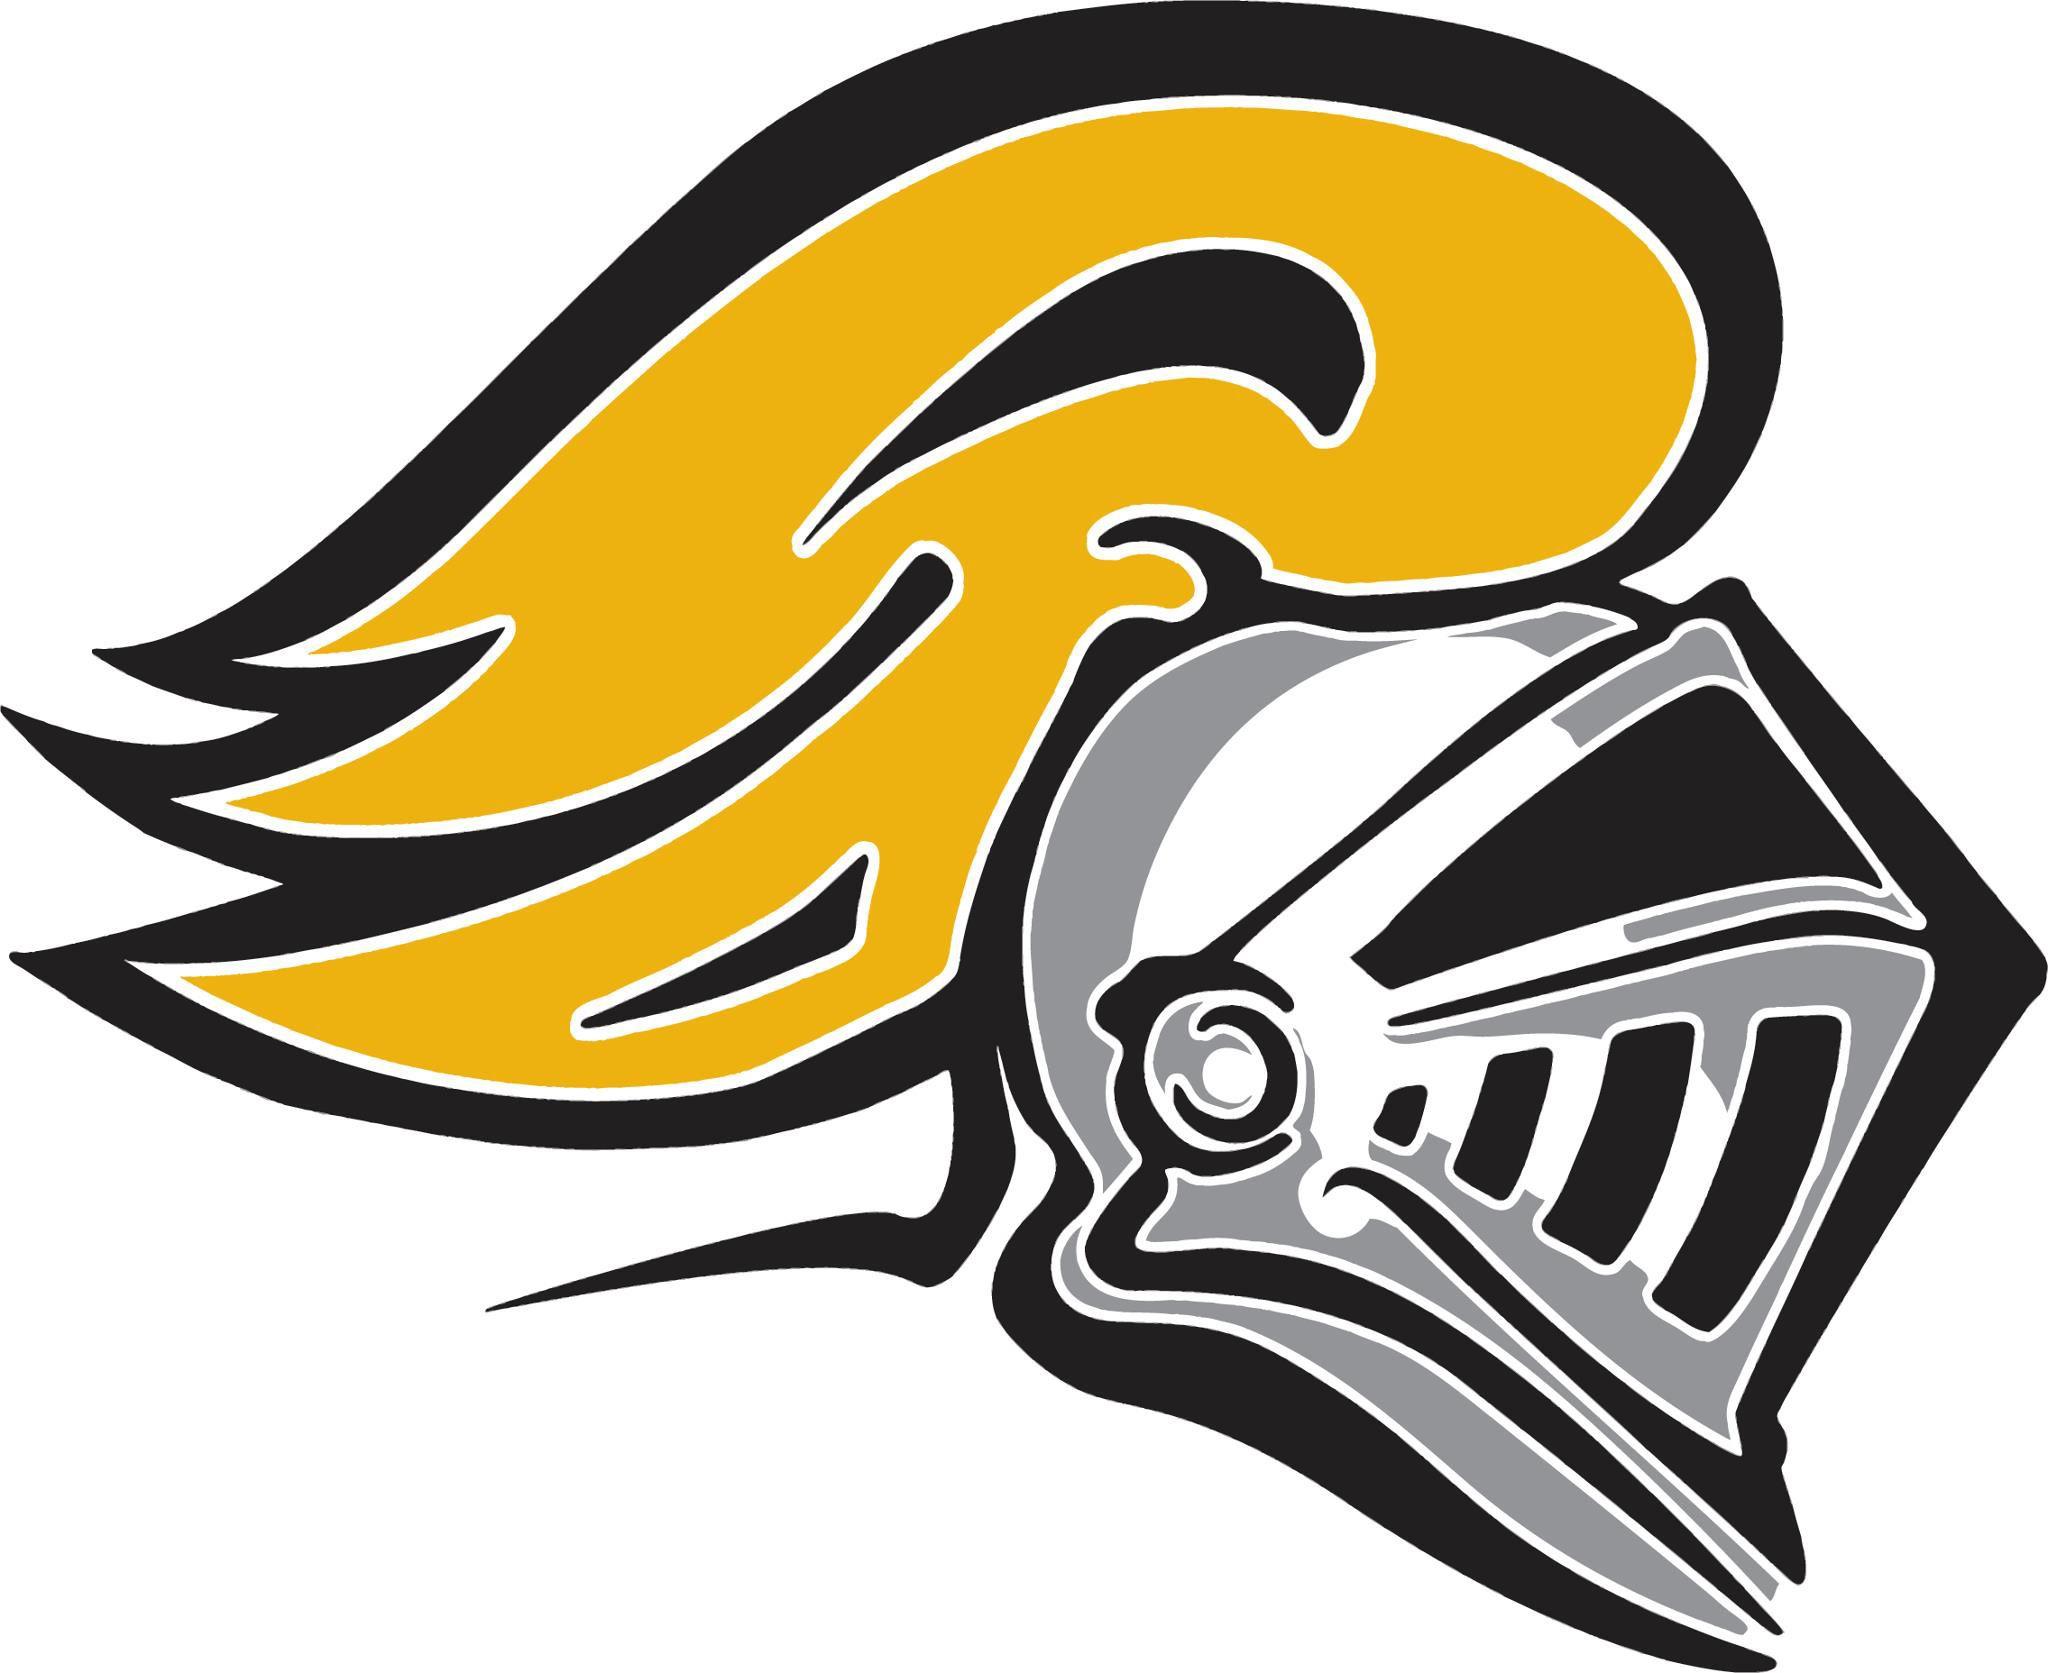 Gold and Black Knights Logo - Golden knights Logos